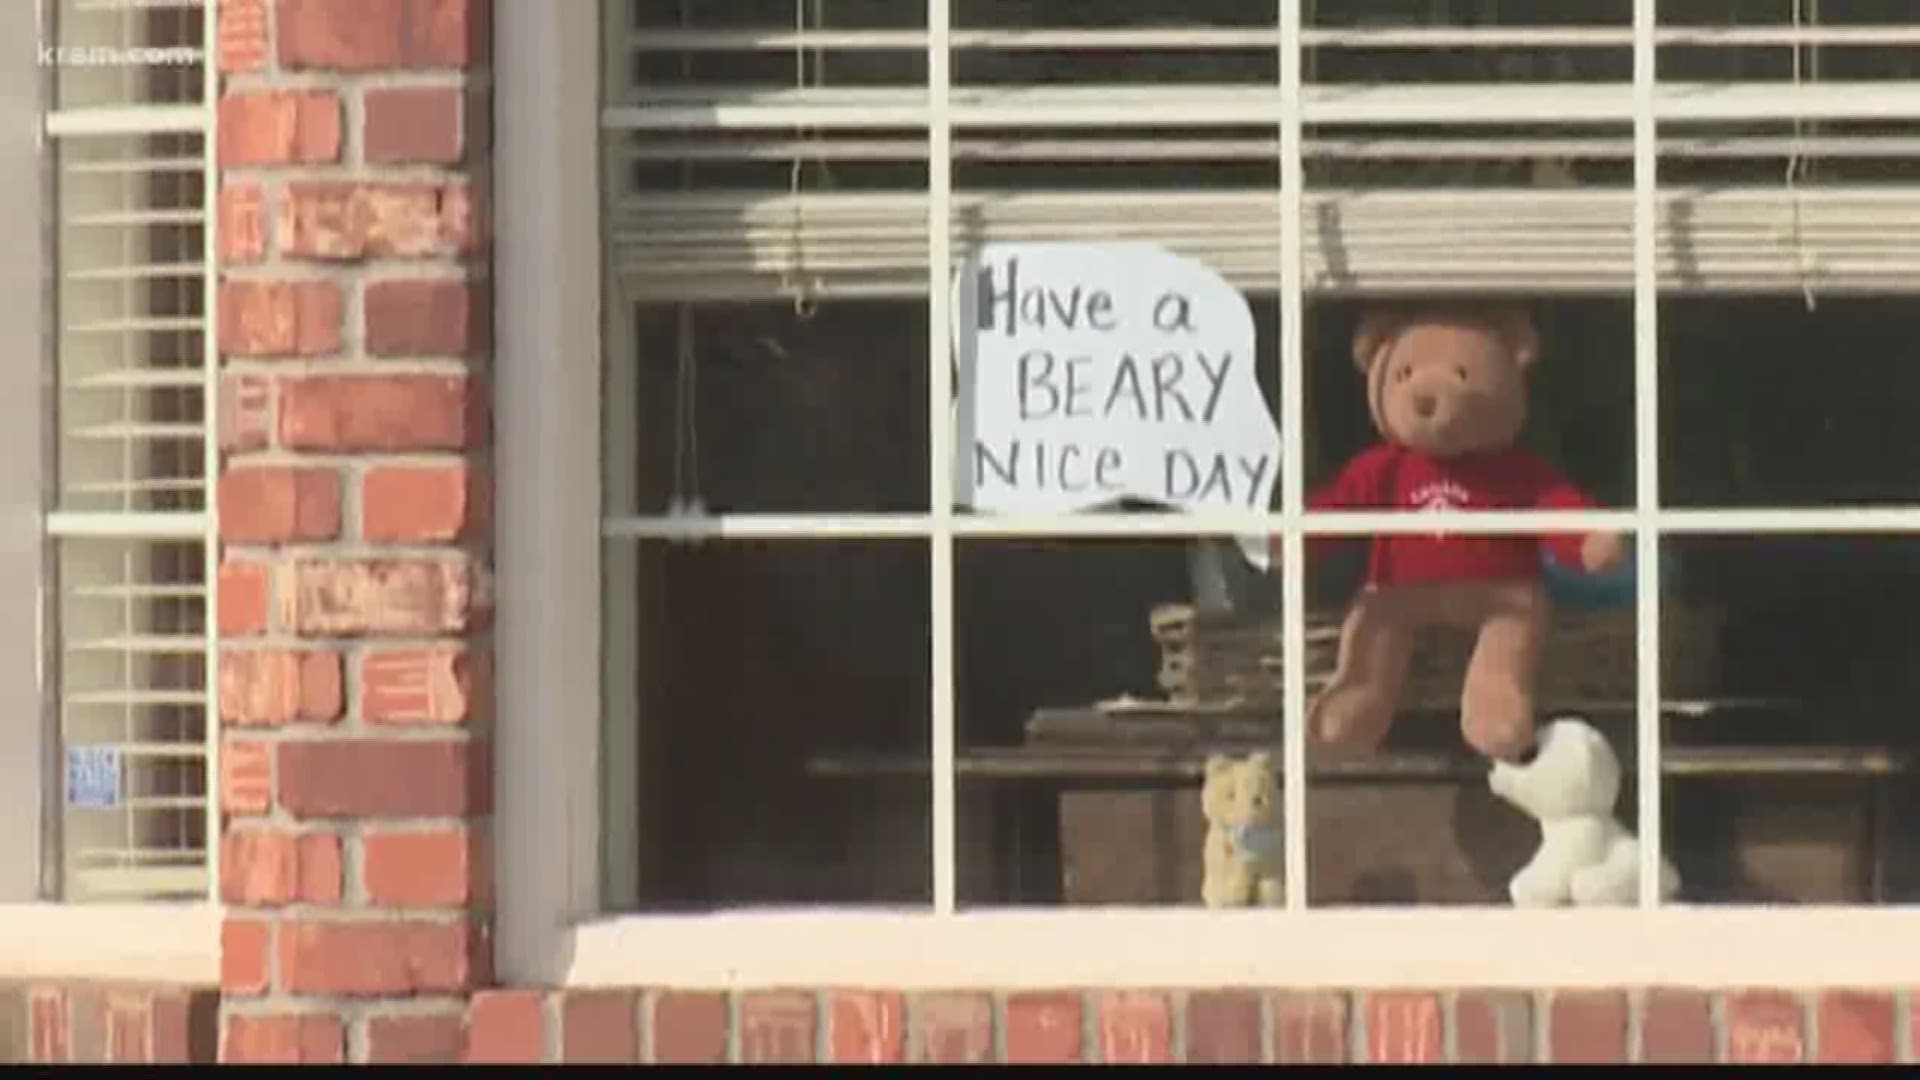 "Going On A Bear Hunt:" neighbors using stuffed bears to help local kids find adventure